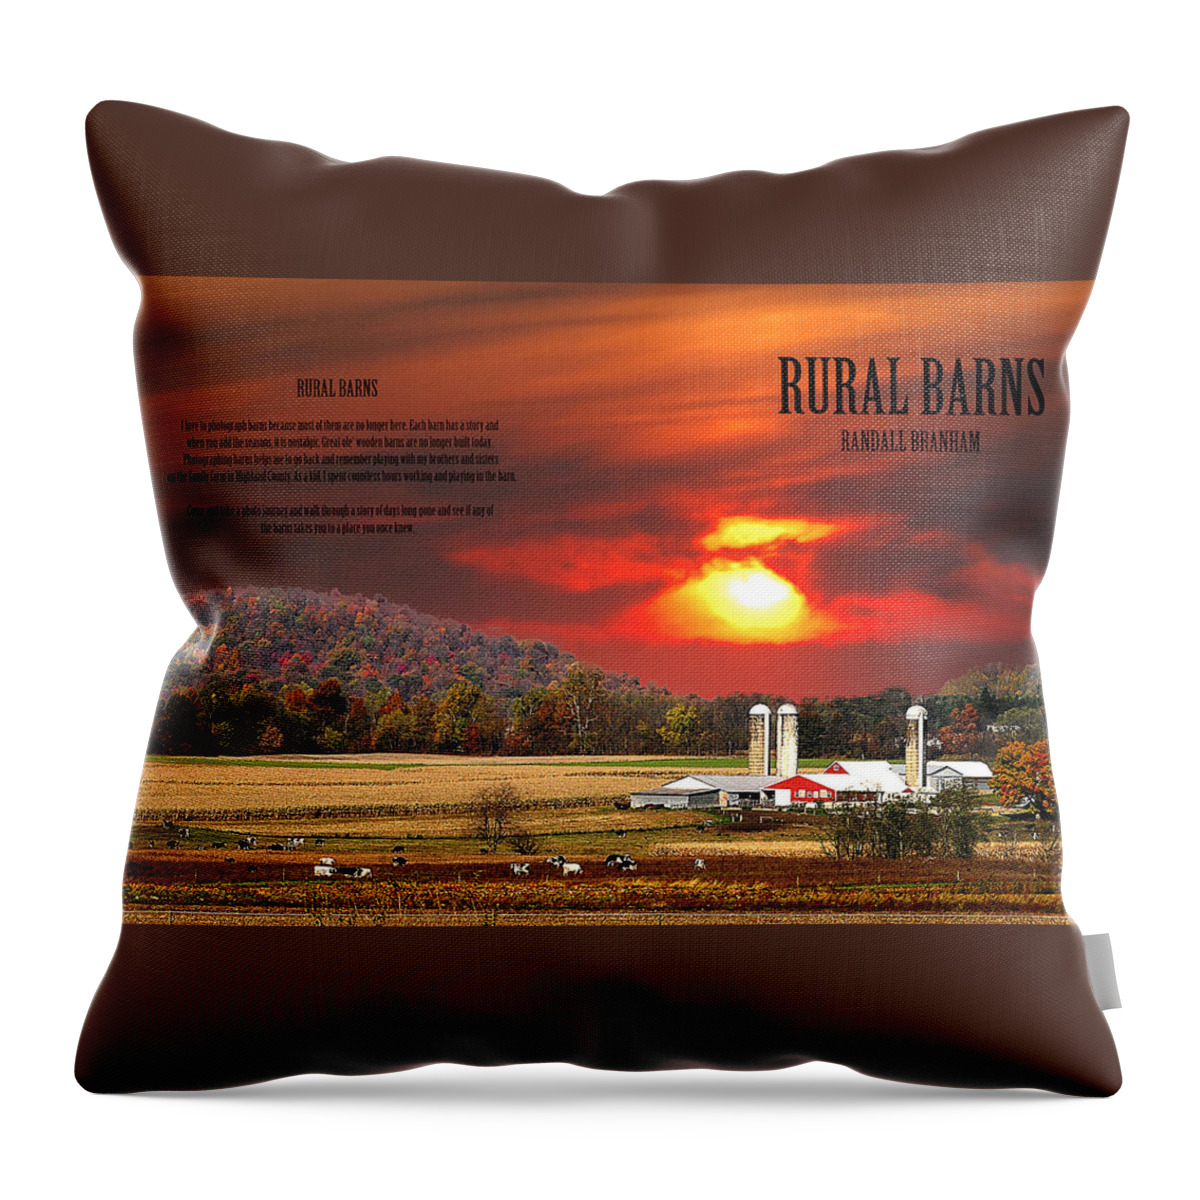 Rural Barns Throw Pillow featuring the photograph RURAL BARNS my BOOK COVER by Randall Branham